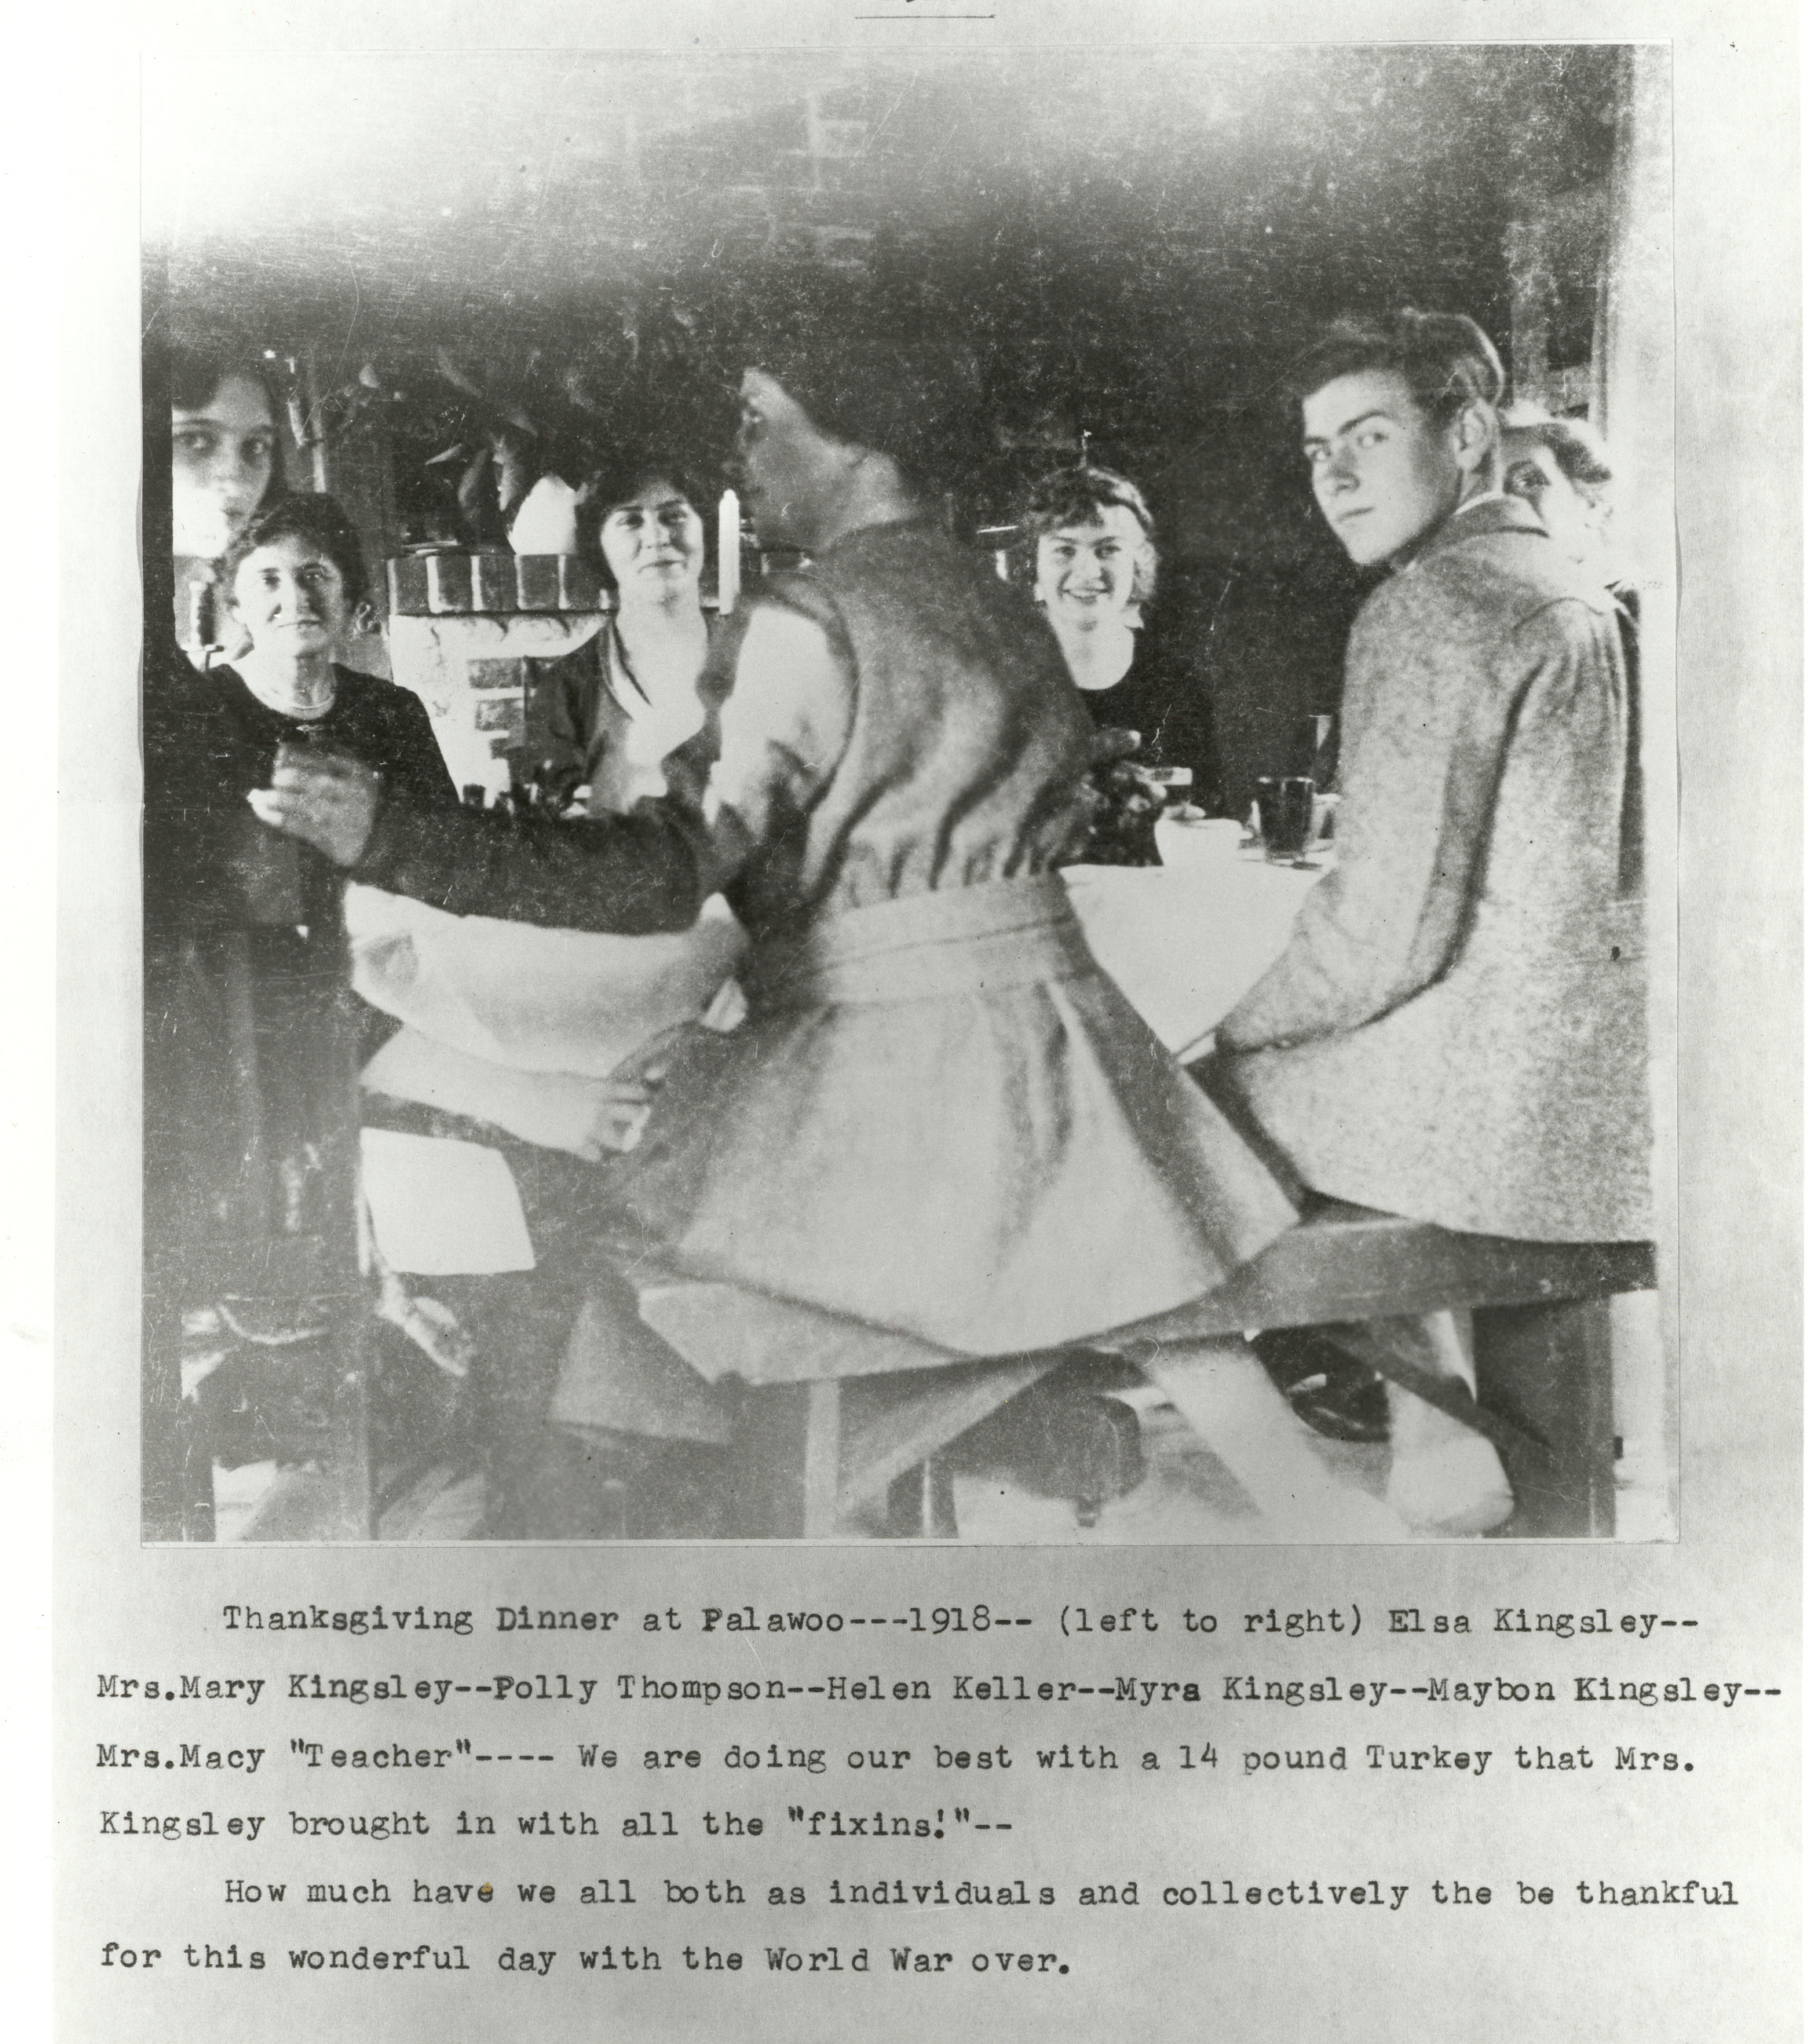 a photo of Helen Keller with friends celebrating Thanksgiving Dinner